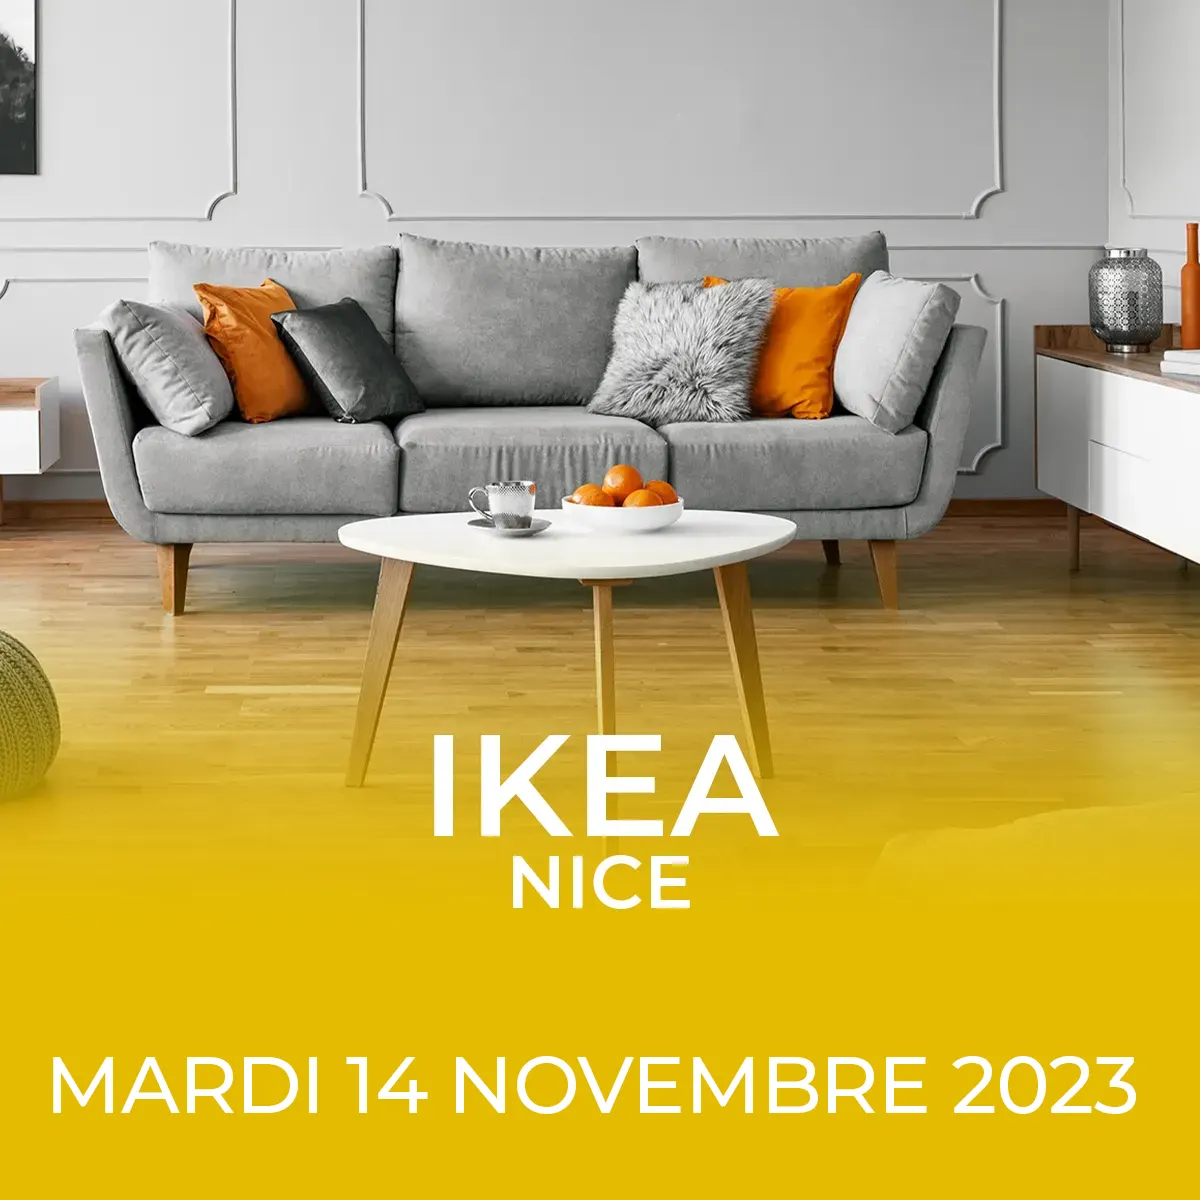 Ikea Nice